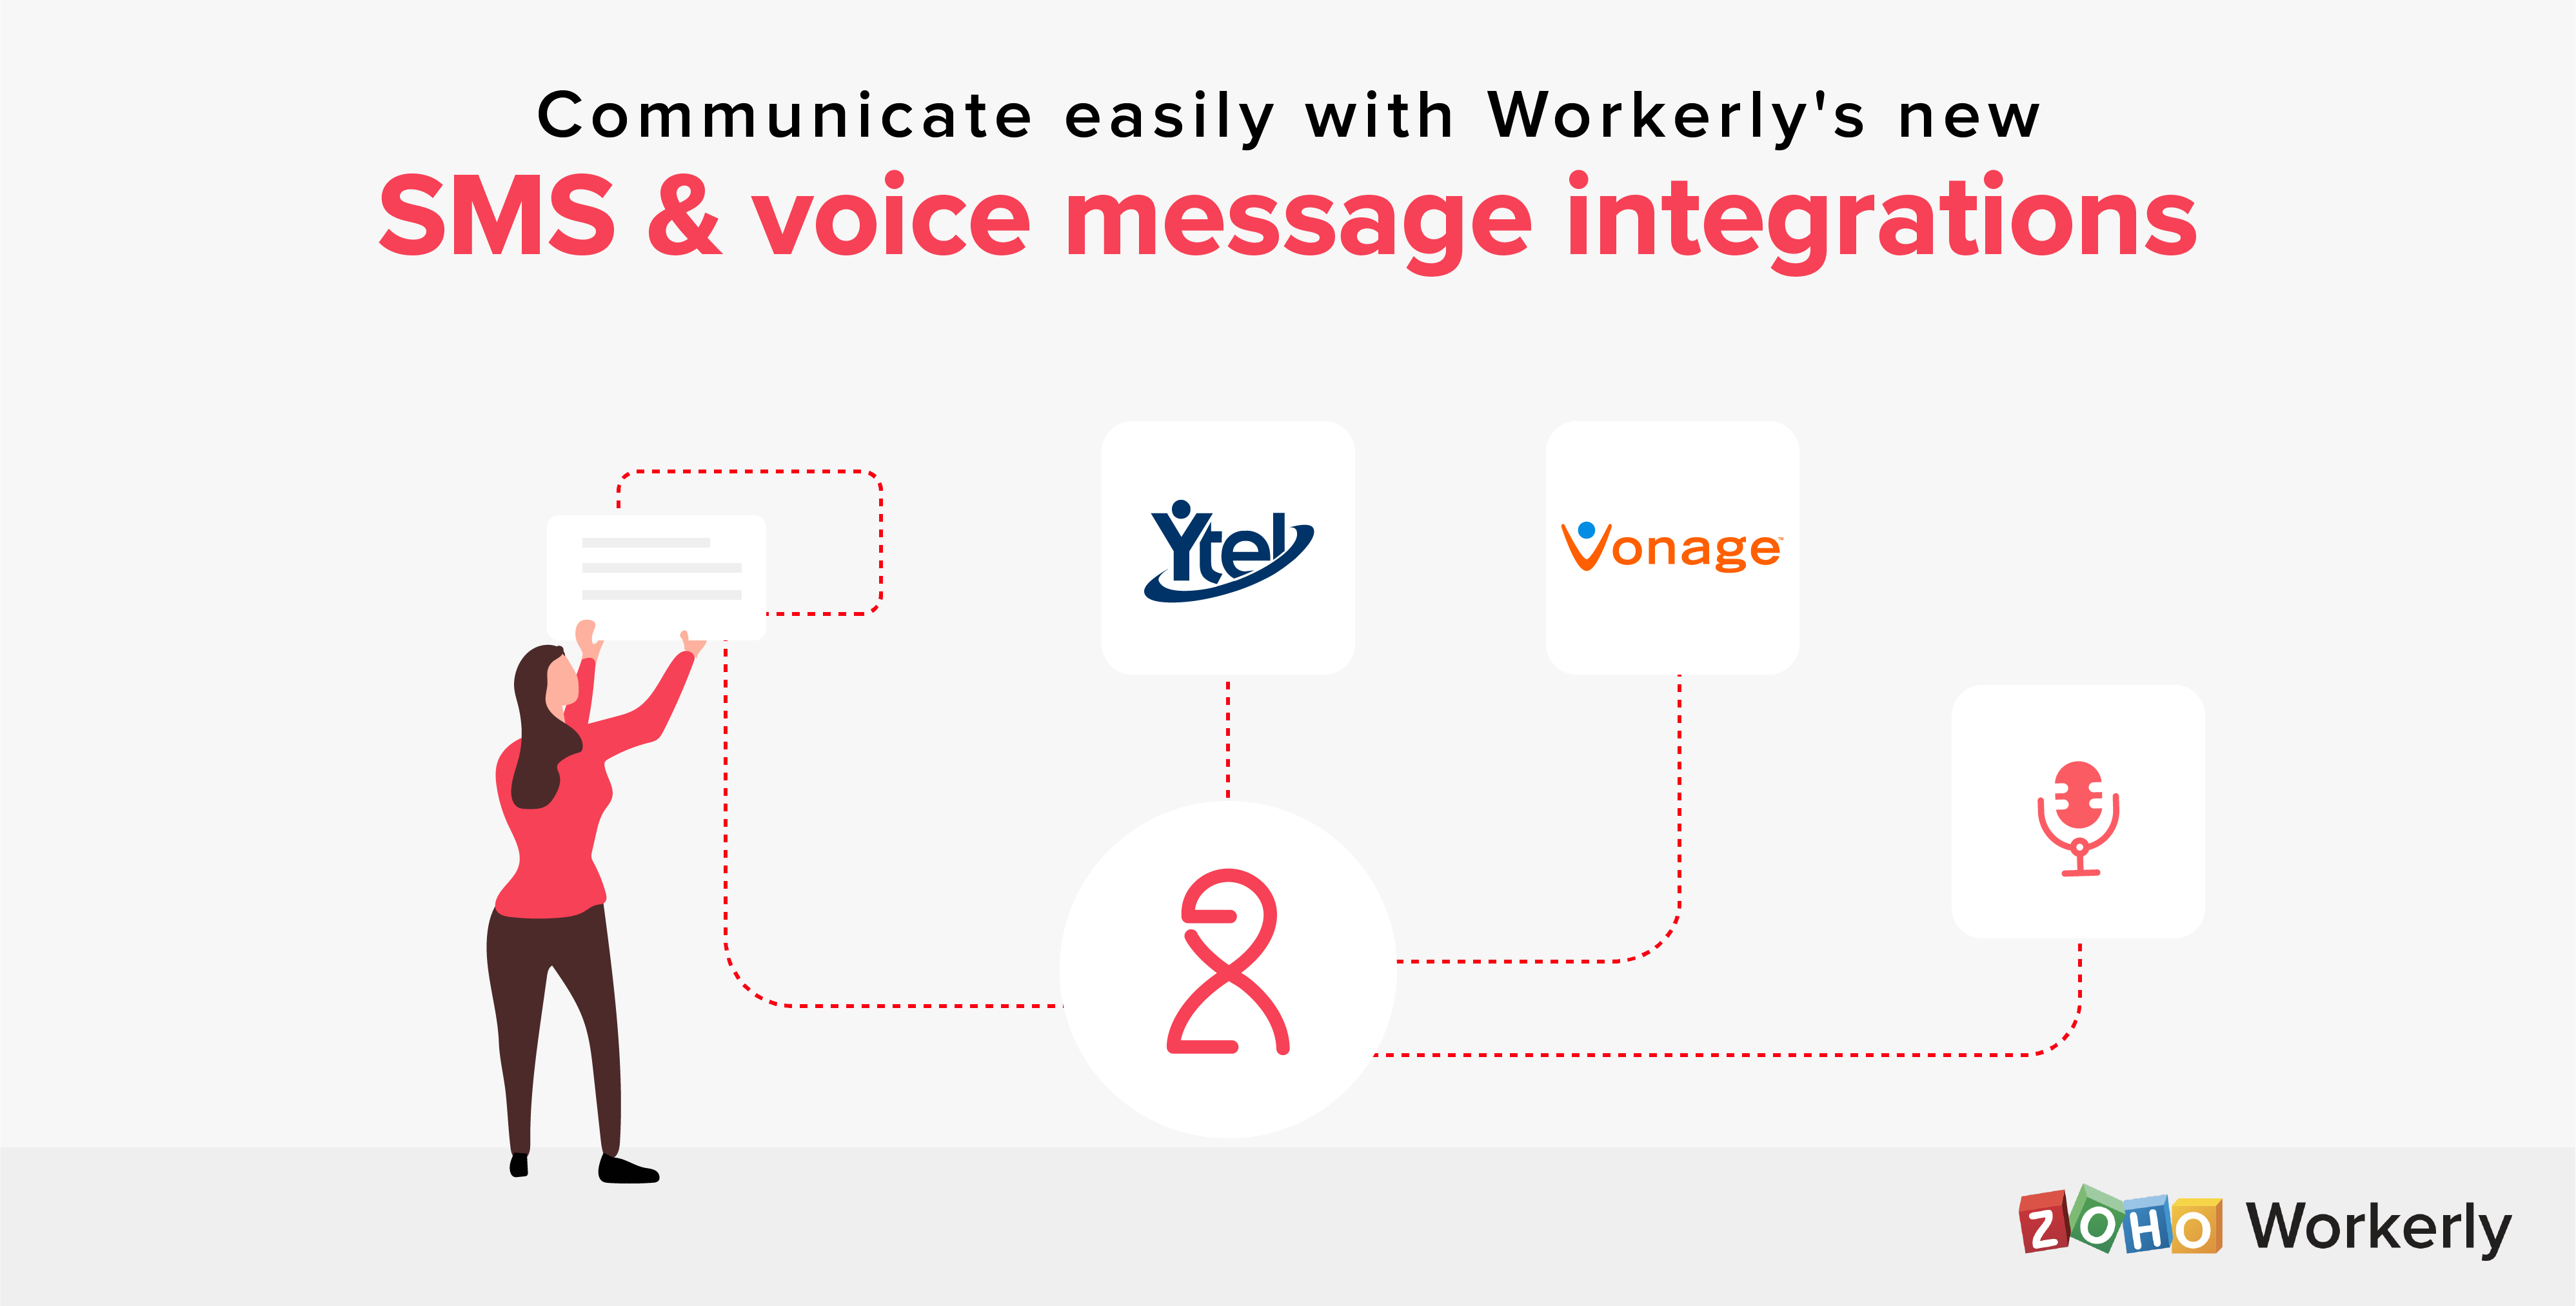 Zoho Workerly integrates with Ytel & Vonage